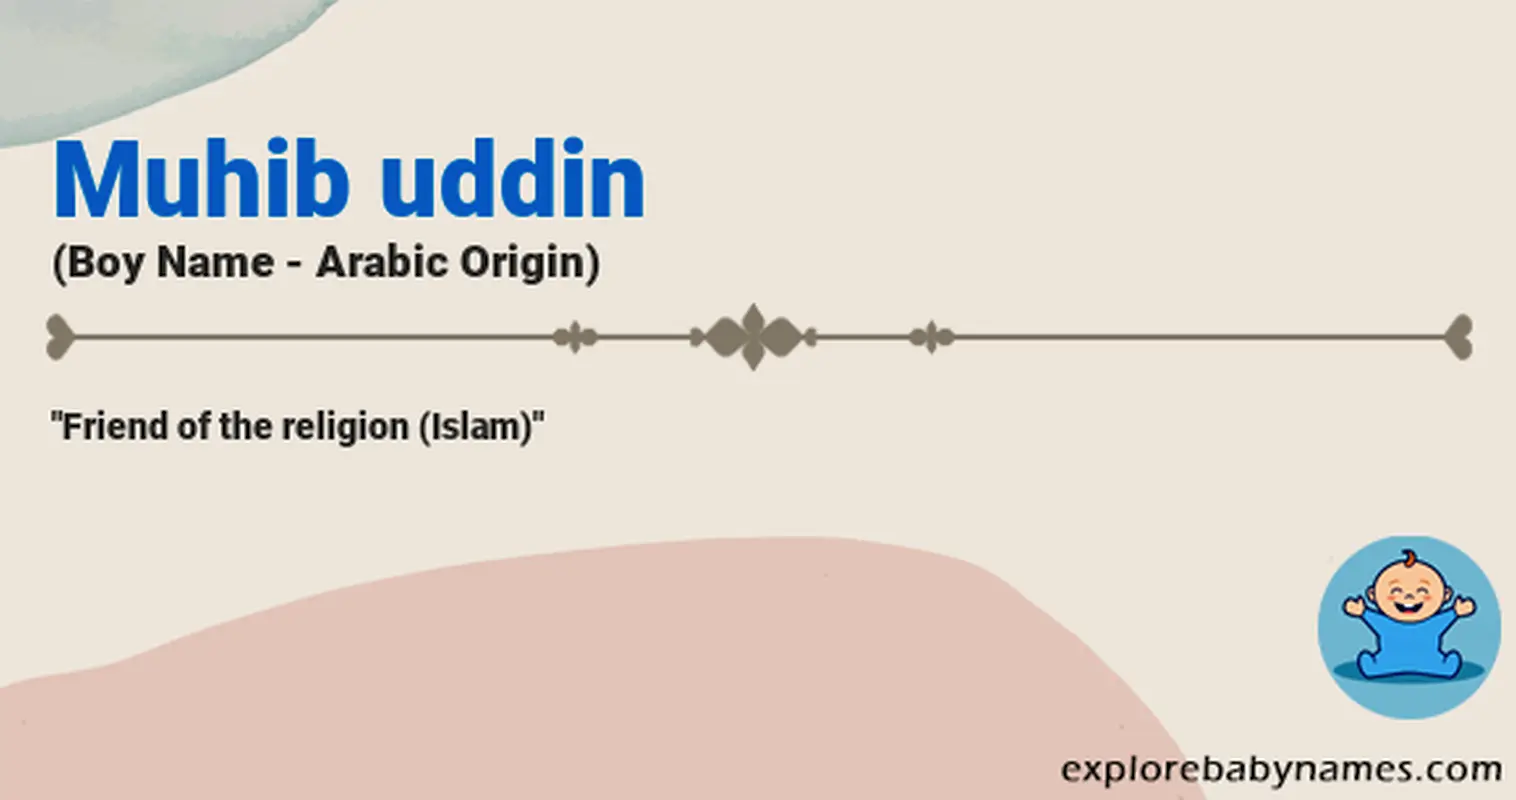 Meaning of Muhib uddin